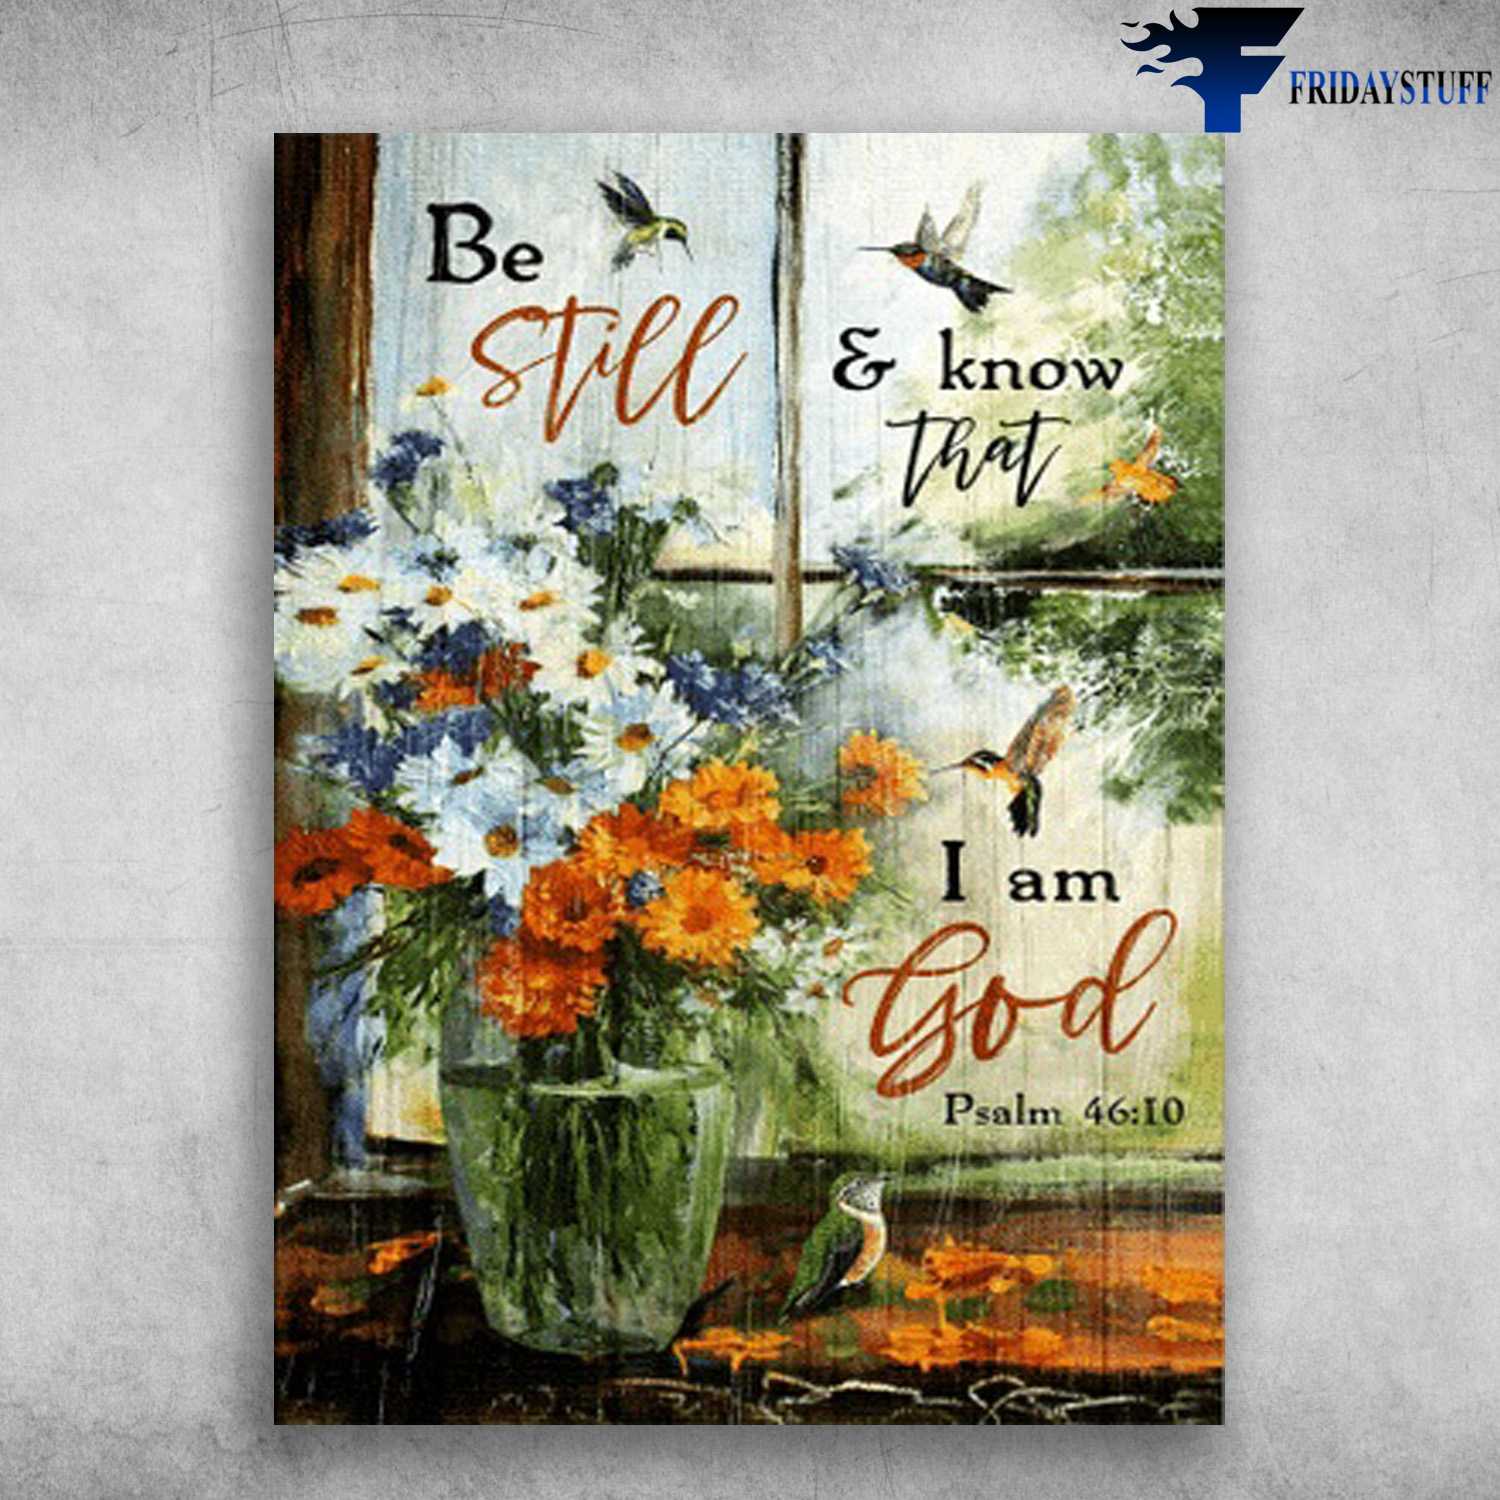 Window Poster, Hummingbird FLower - Bestill And Know That, I Am God